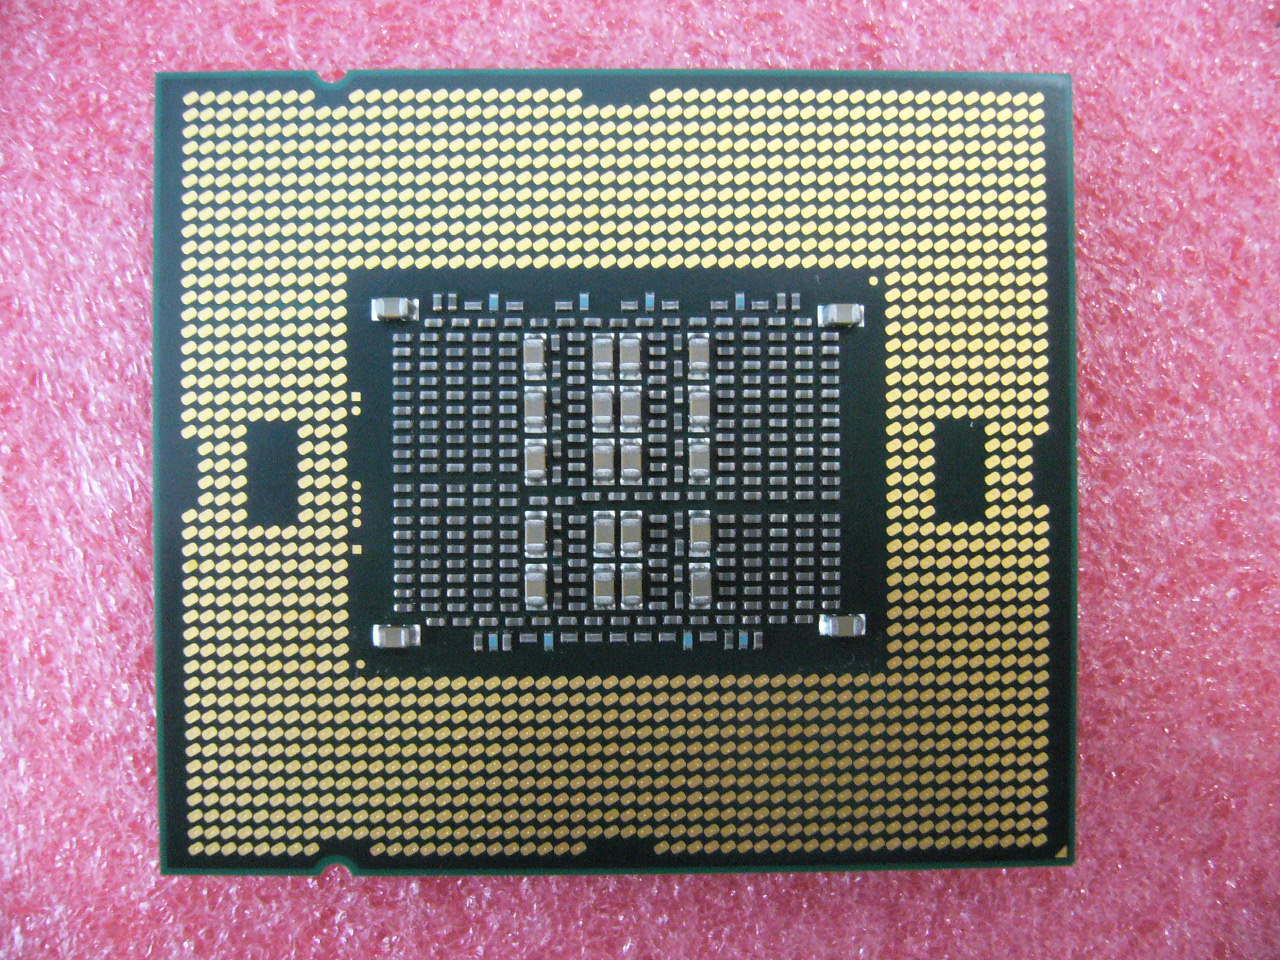 QTY 1x INTEL Eight-Cores CPU E7-4830 2.13GHZ/24MB 6.4GT/s QPI LGA1567 SLC3Q - zum Schließen ins Bild klicken